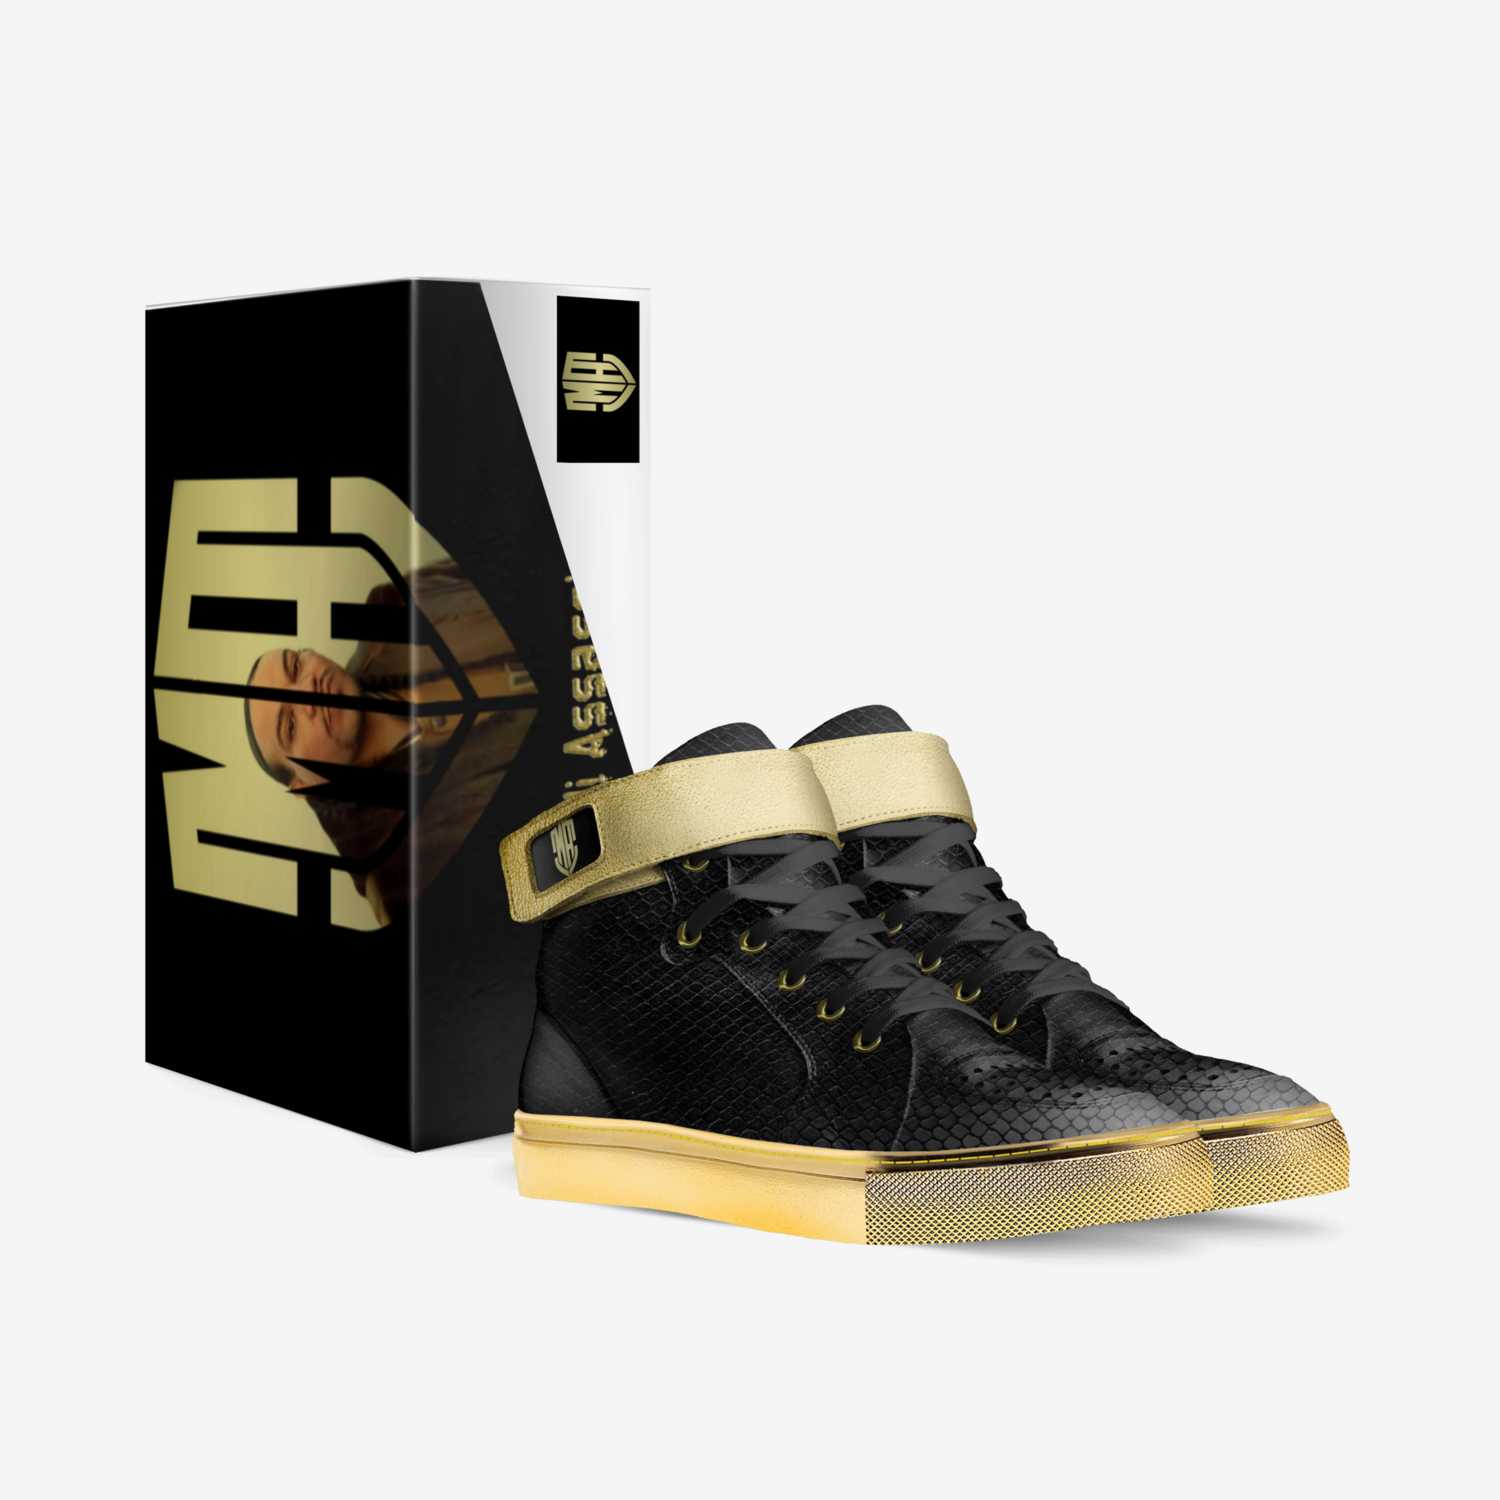 Assassin Makaveli  custom made in Italy shoes by The Giftedcompanyllc & Chri$ Lowe | Box view